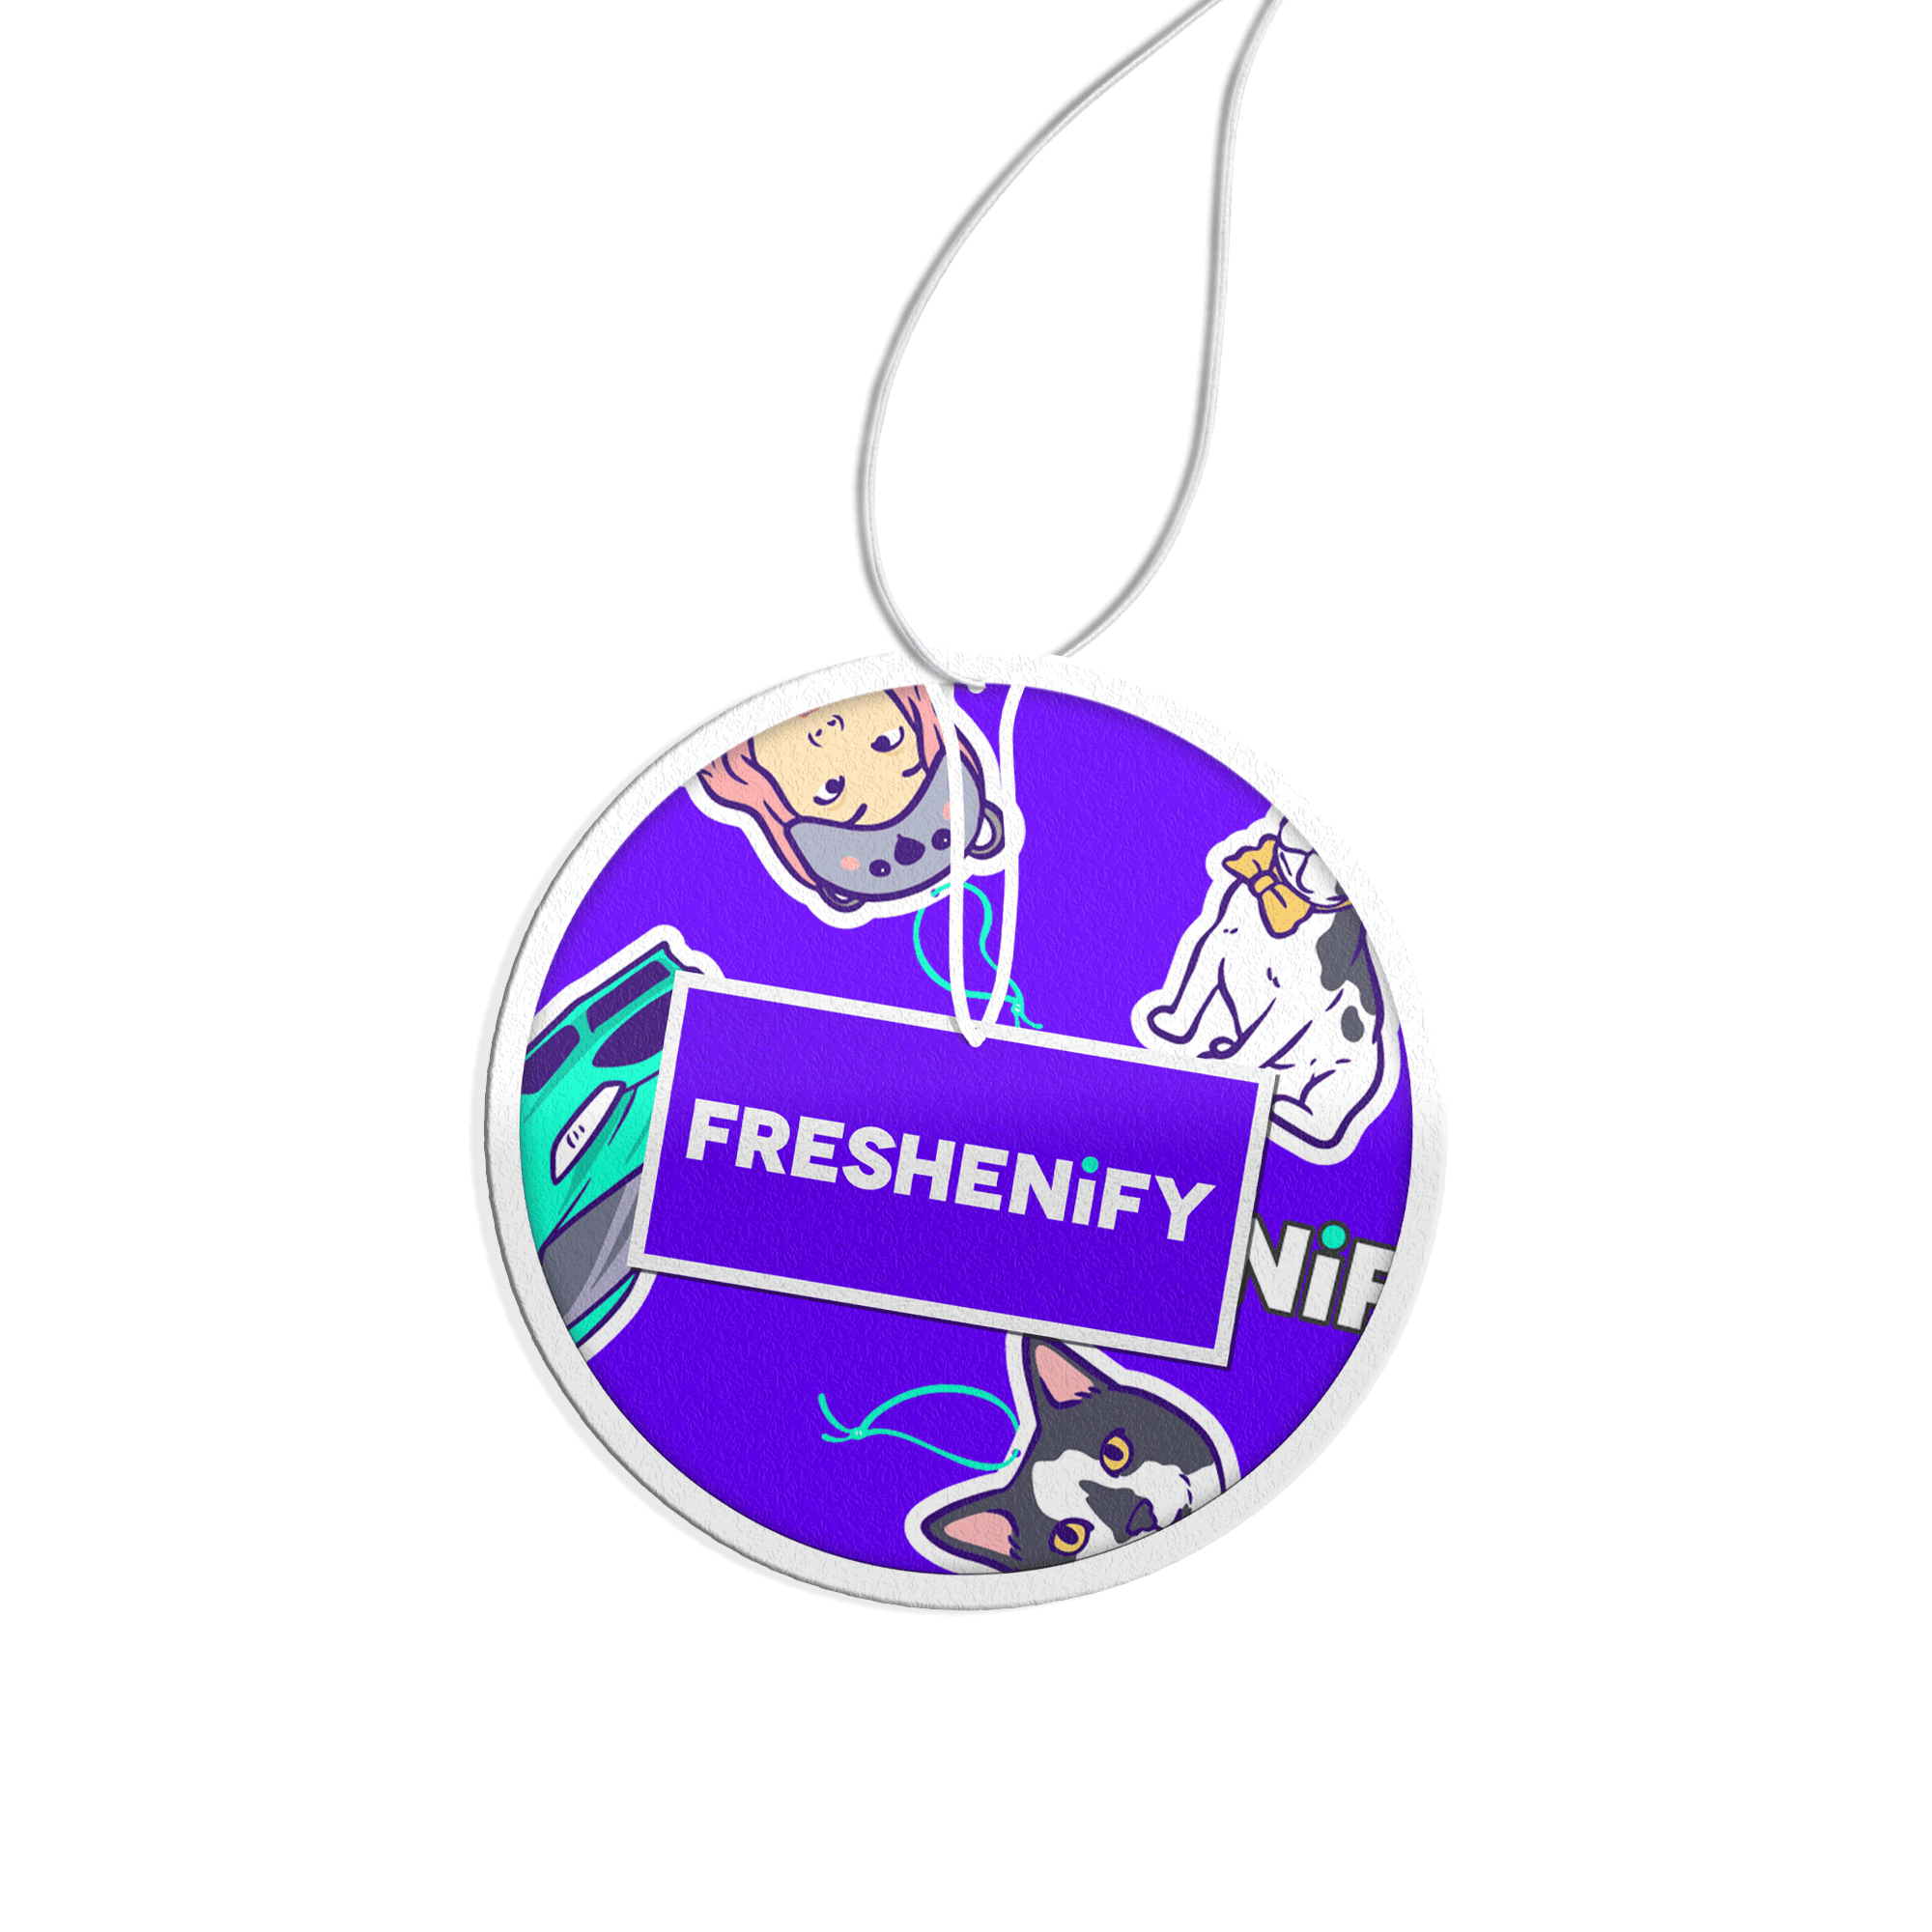 Freshenify Round Car Air Freshener - FRESHENiFY - Customised Air Fresheners